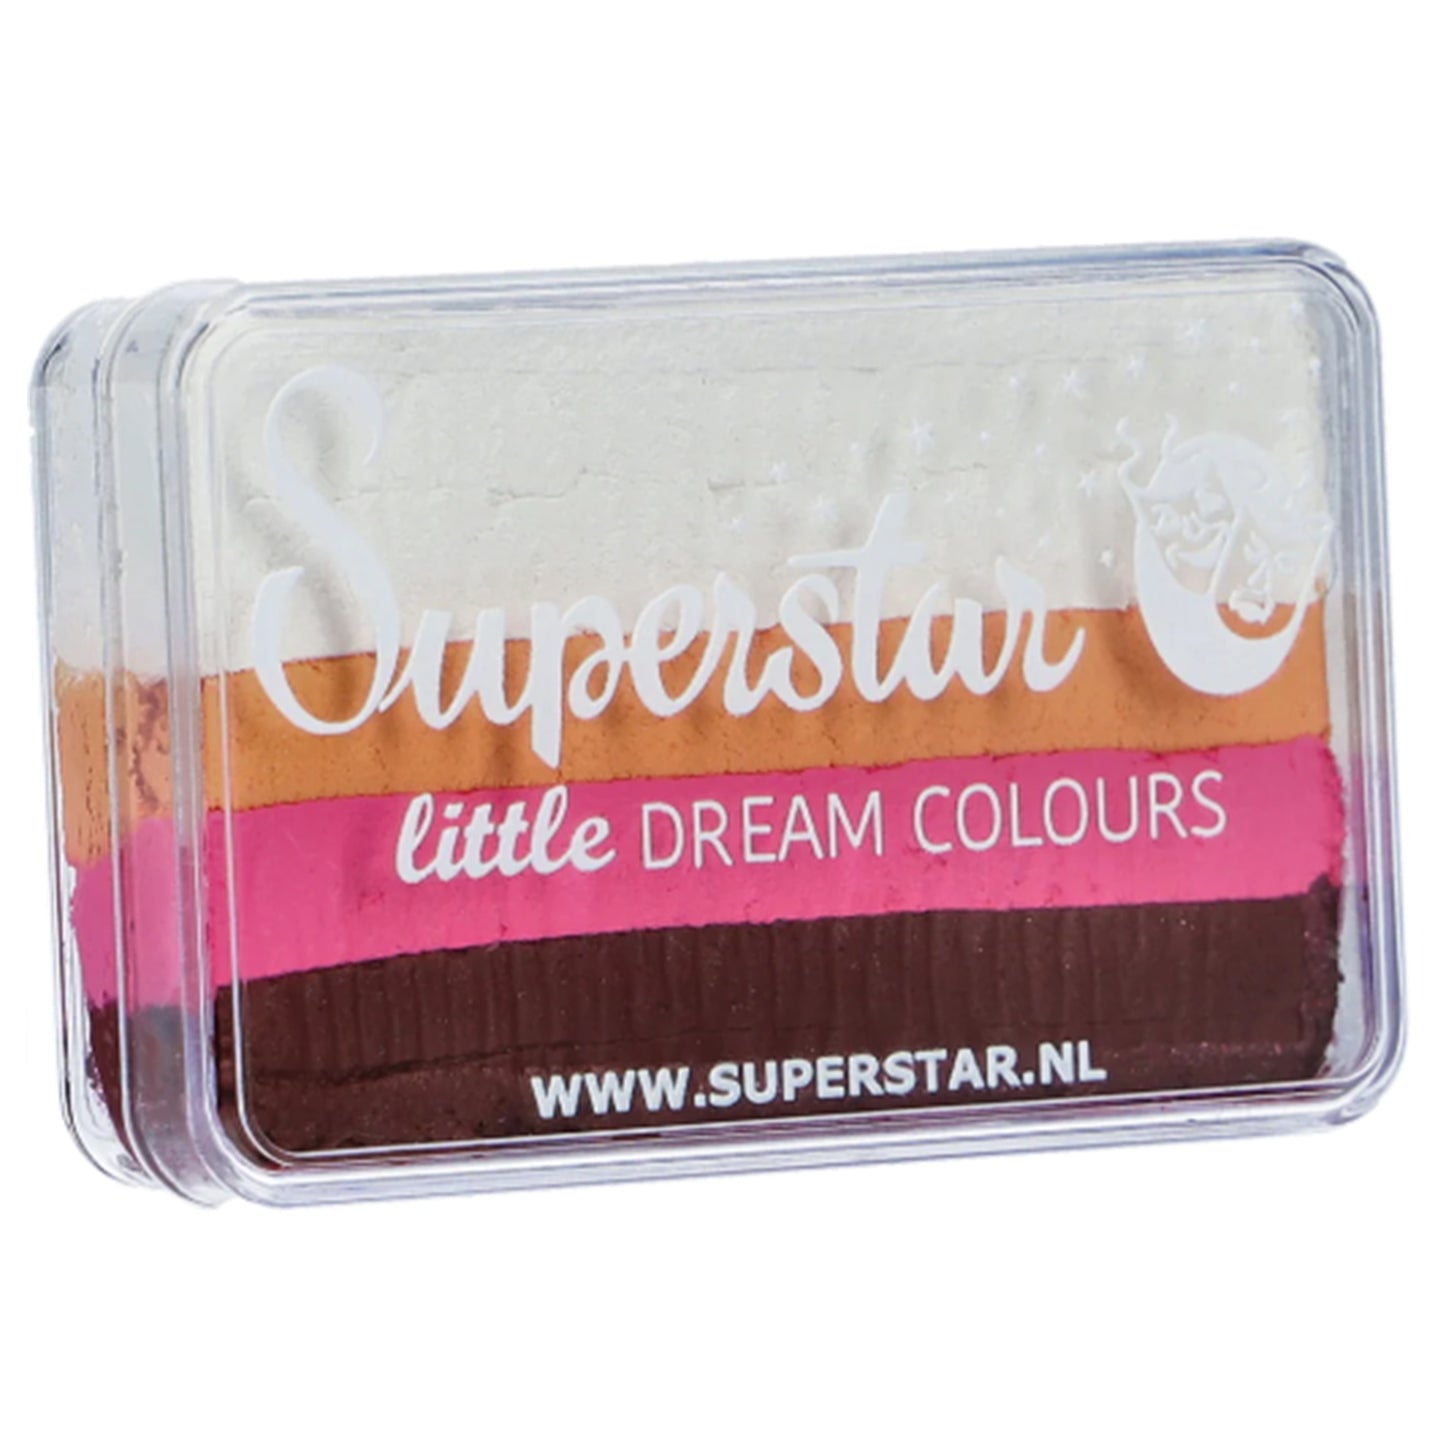 Superstar Little Dream Colours Rainbow Cake - Little Rose (30 gm)